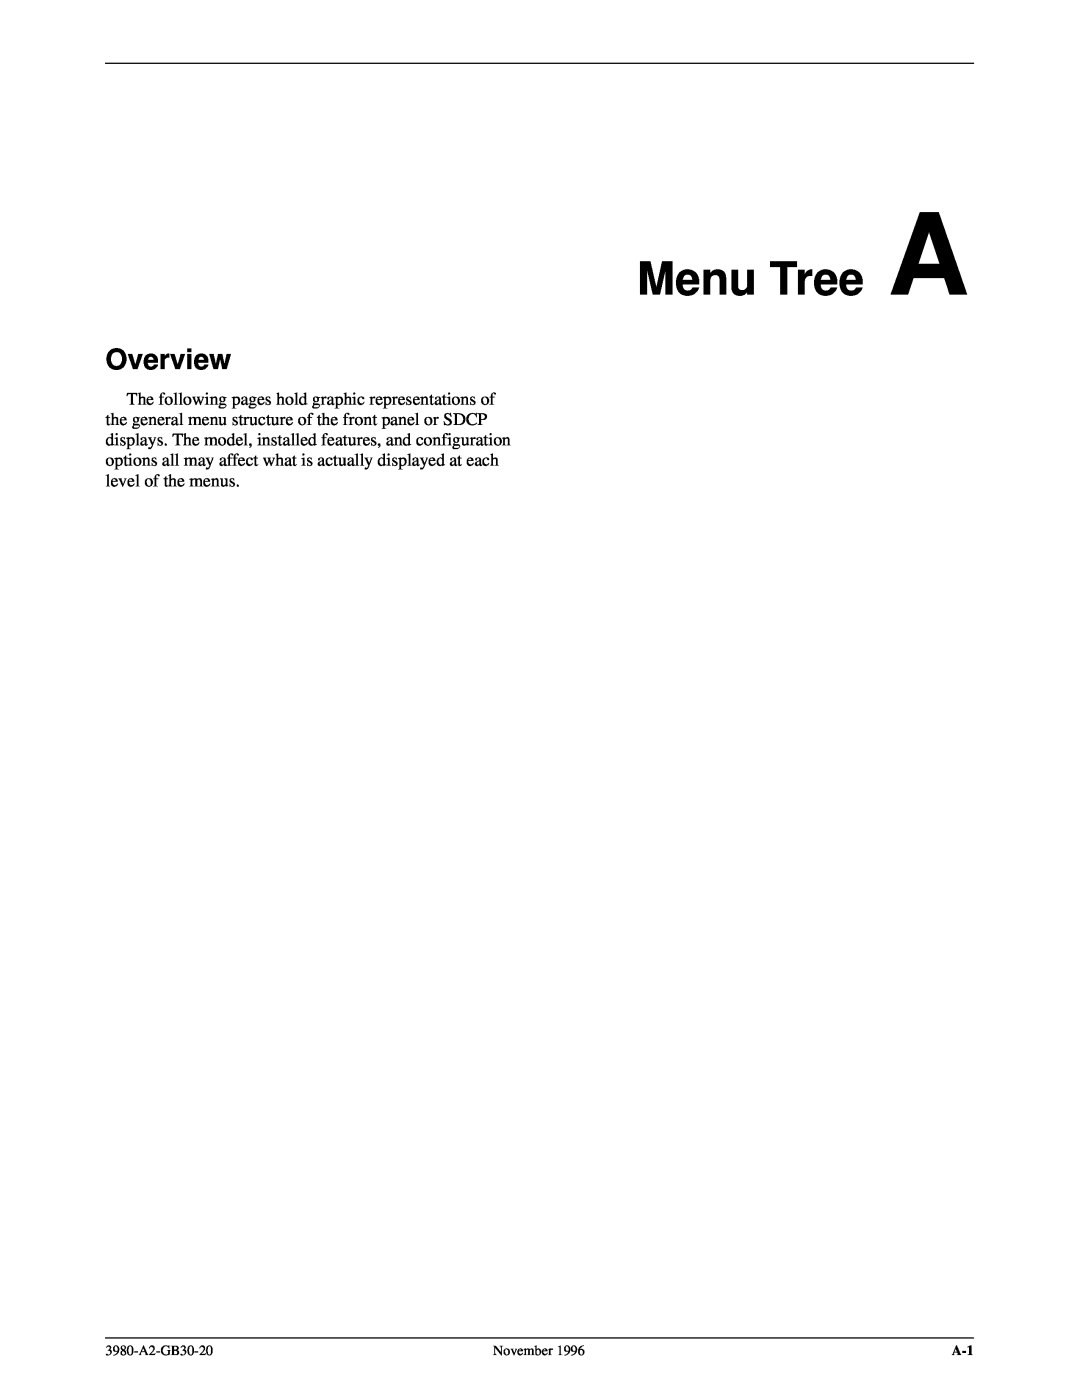 Paradyne 3800PLUS manual Menu Tree A, Overview, 3980-A2-GB30-20, November 